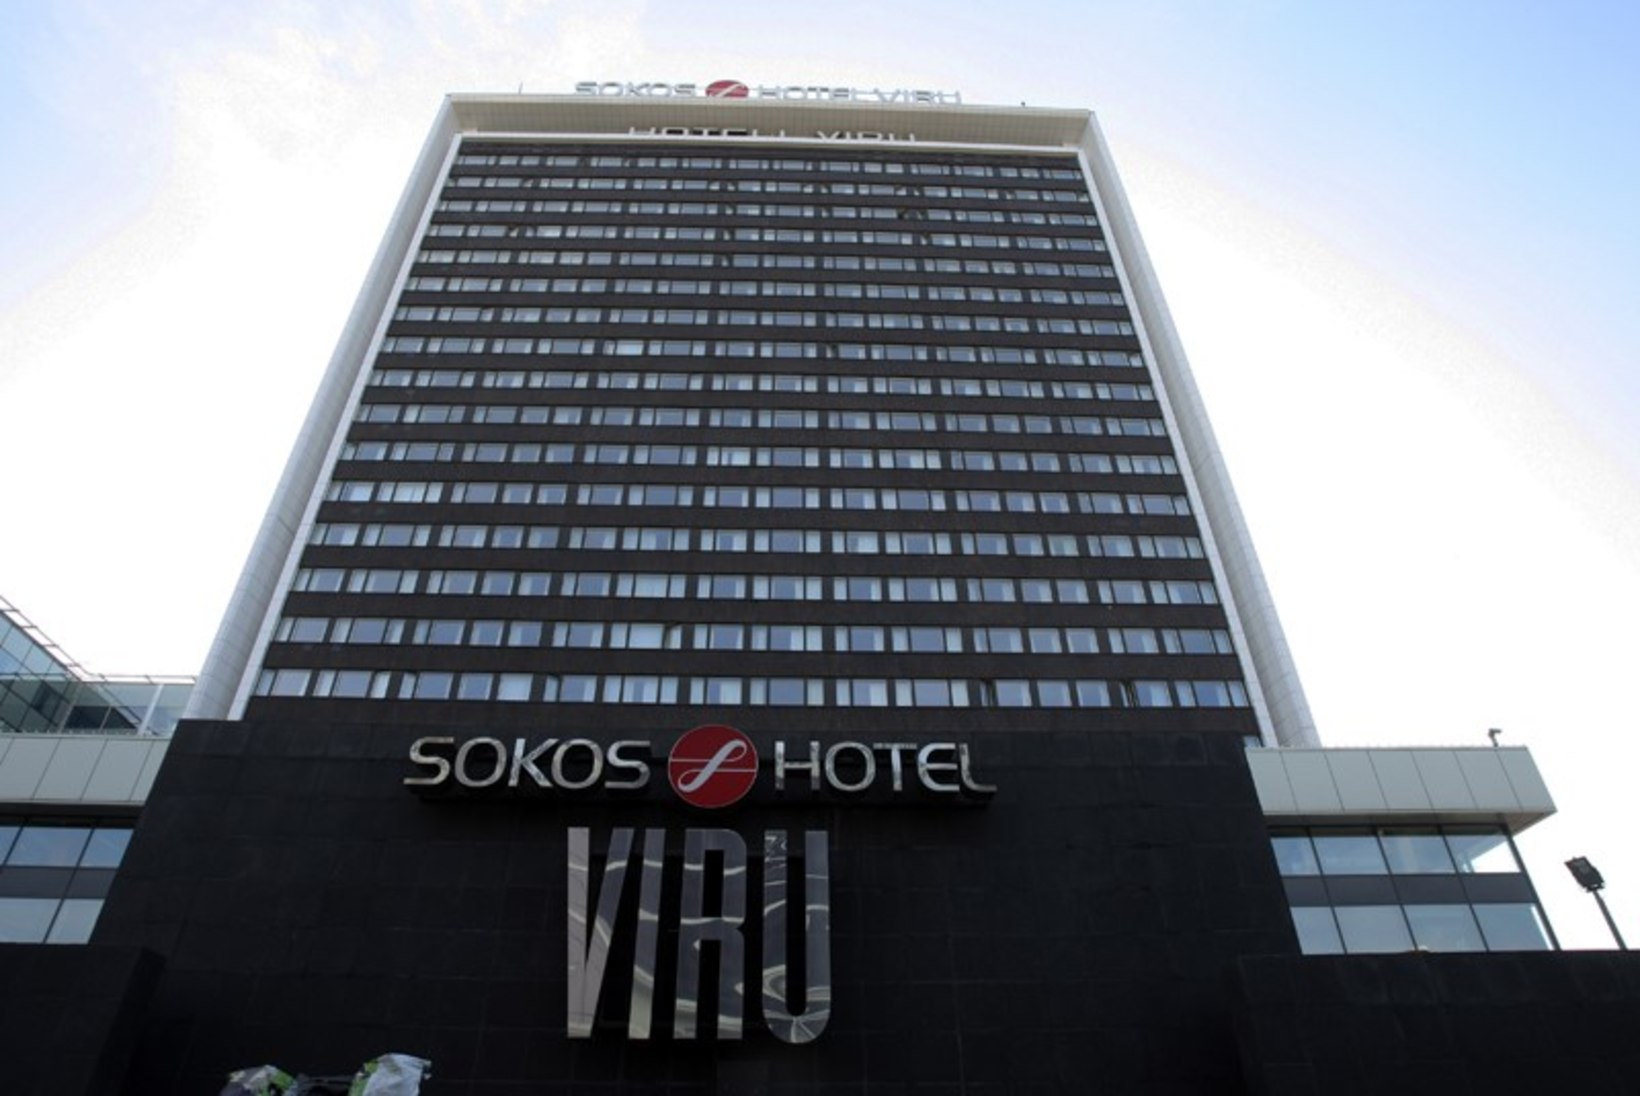 Viru hotell nõuab Tallinnalt raha